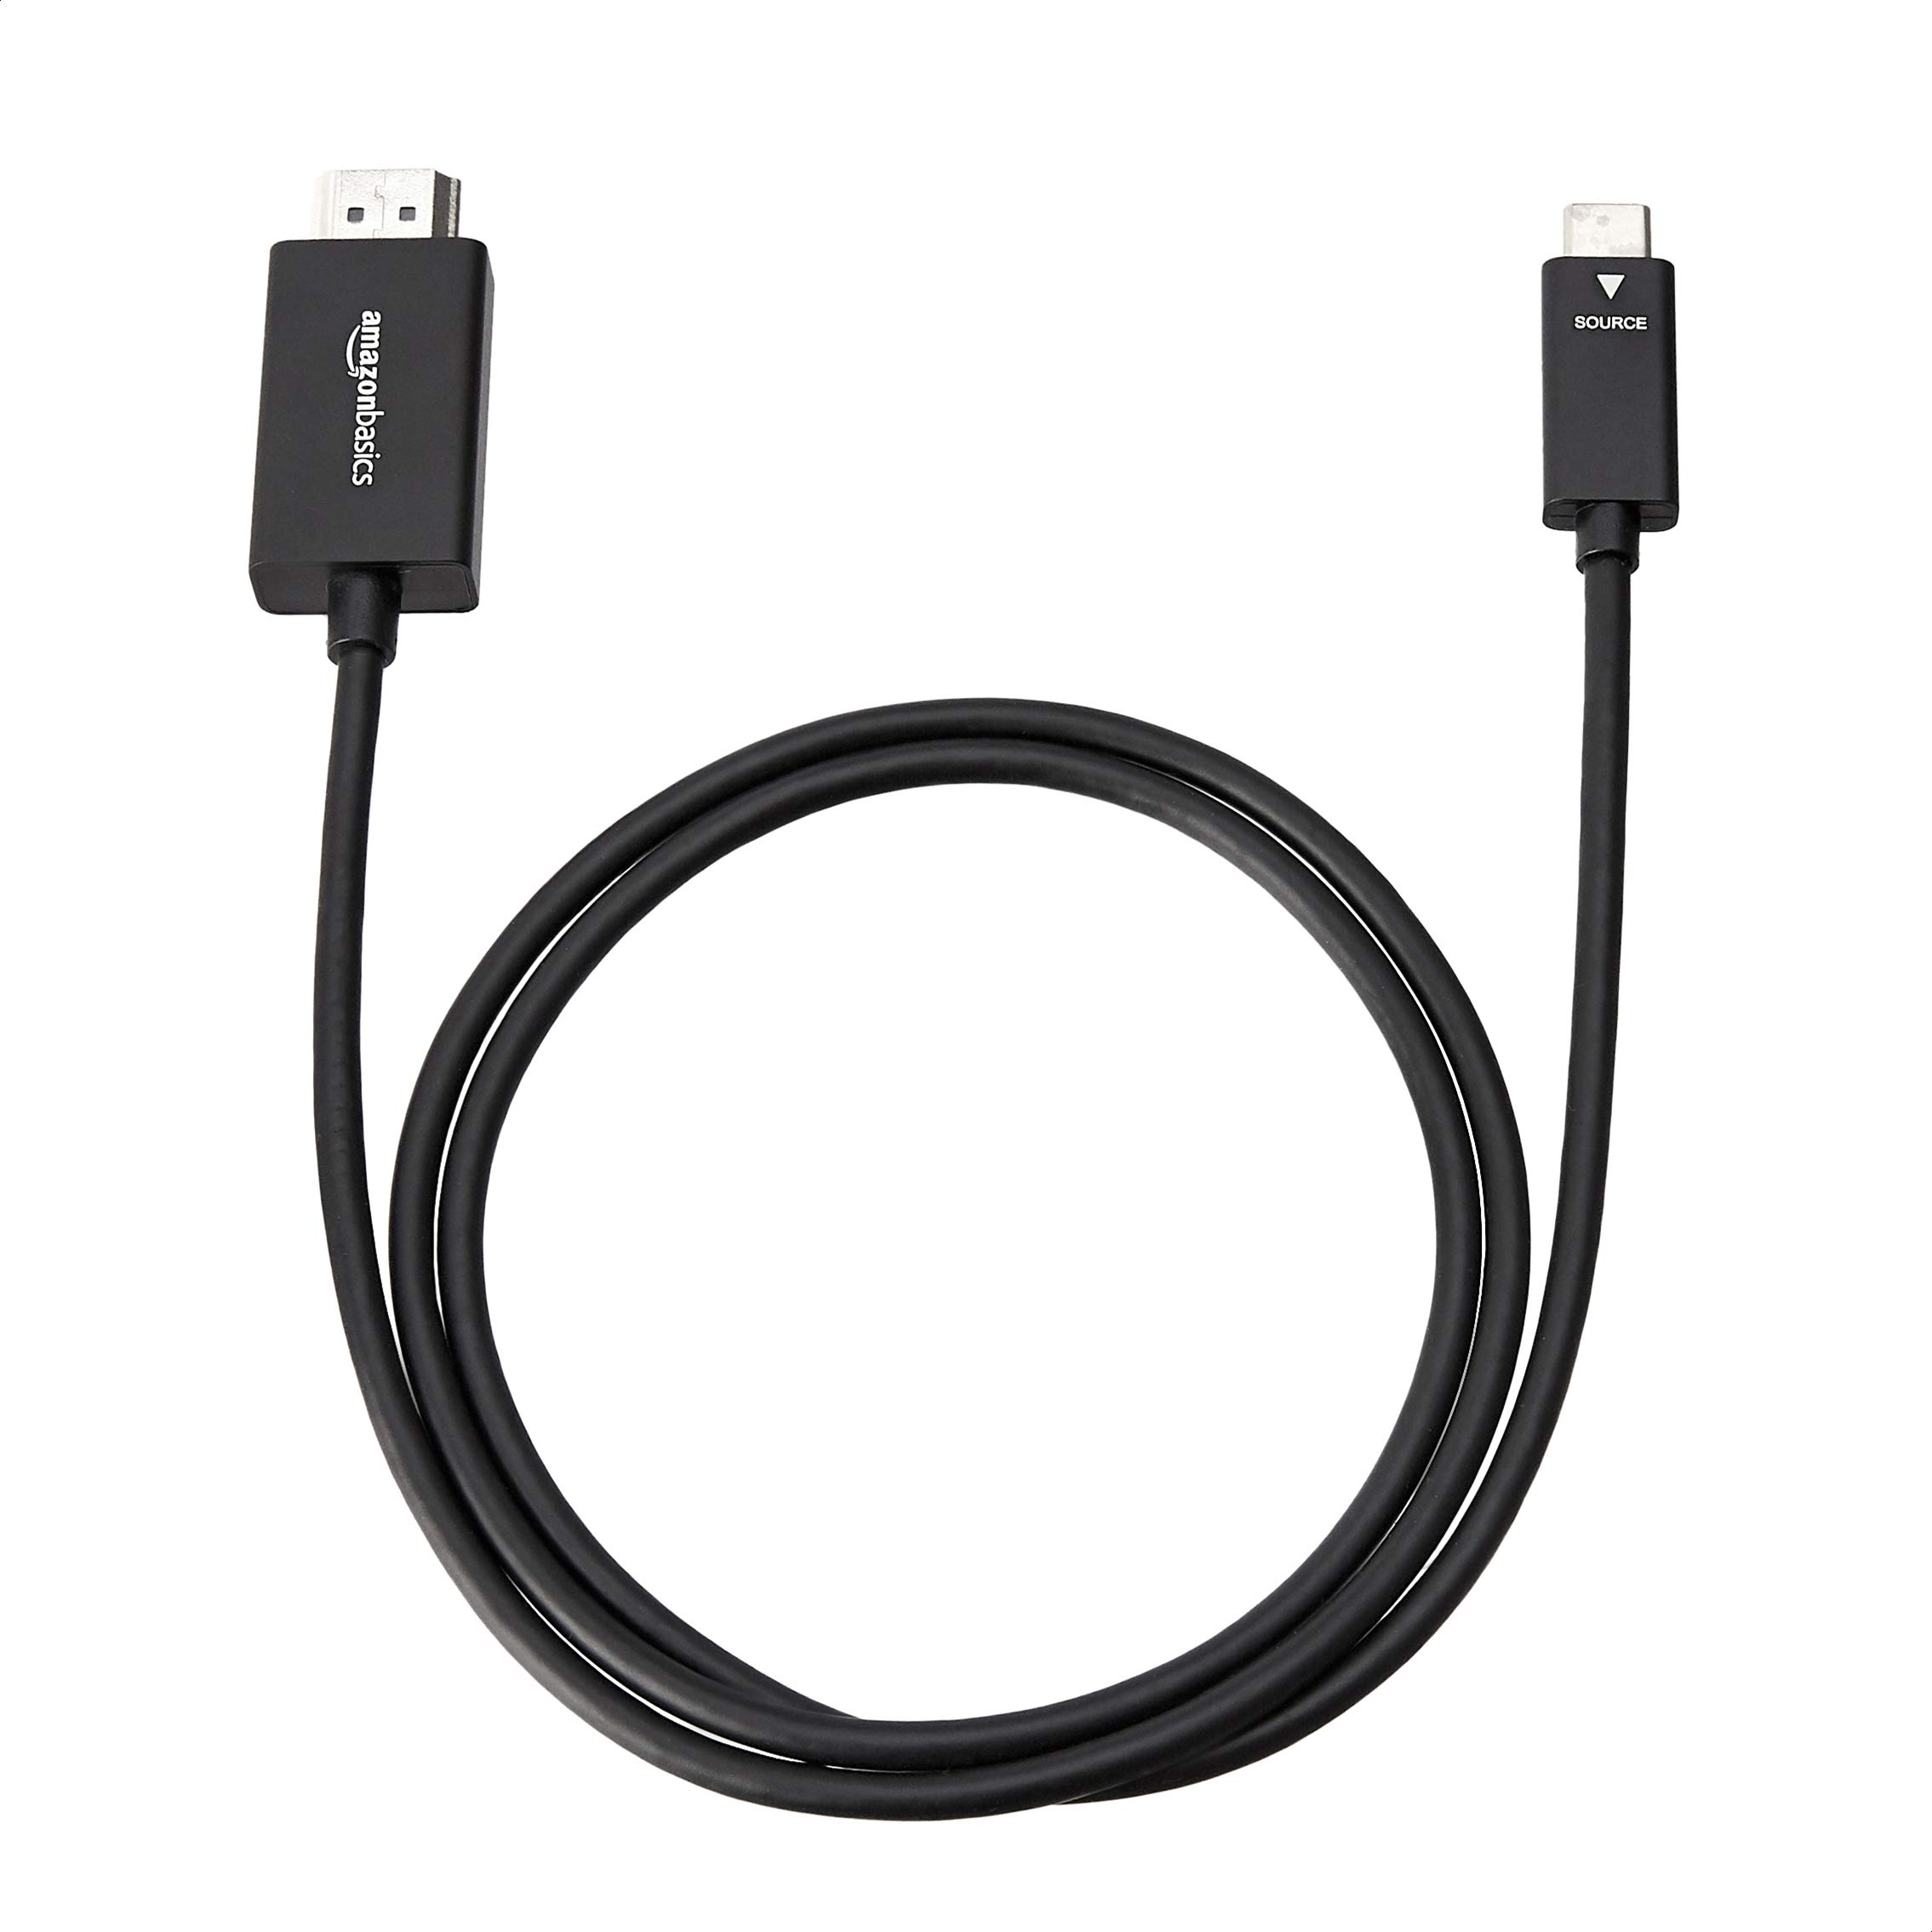 Amazon Basics Premium Aluminum USB-C to HDMI Cable Adapter (Thunderbolt 3 Compatible) 4K@60Hz - 3-Foot